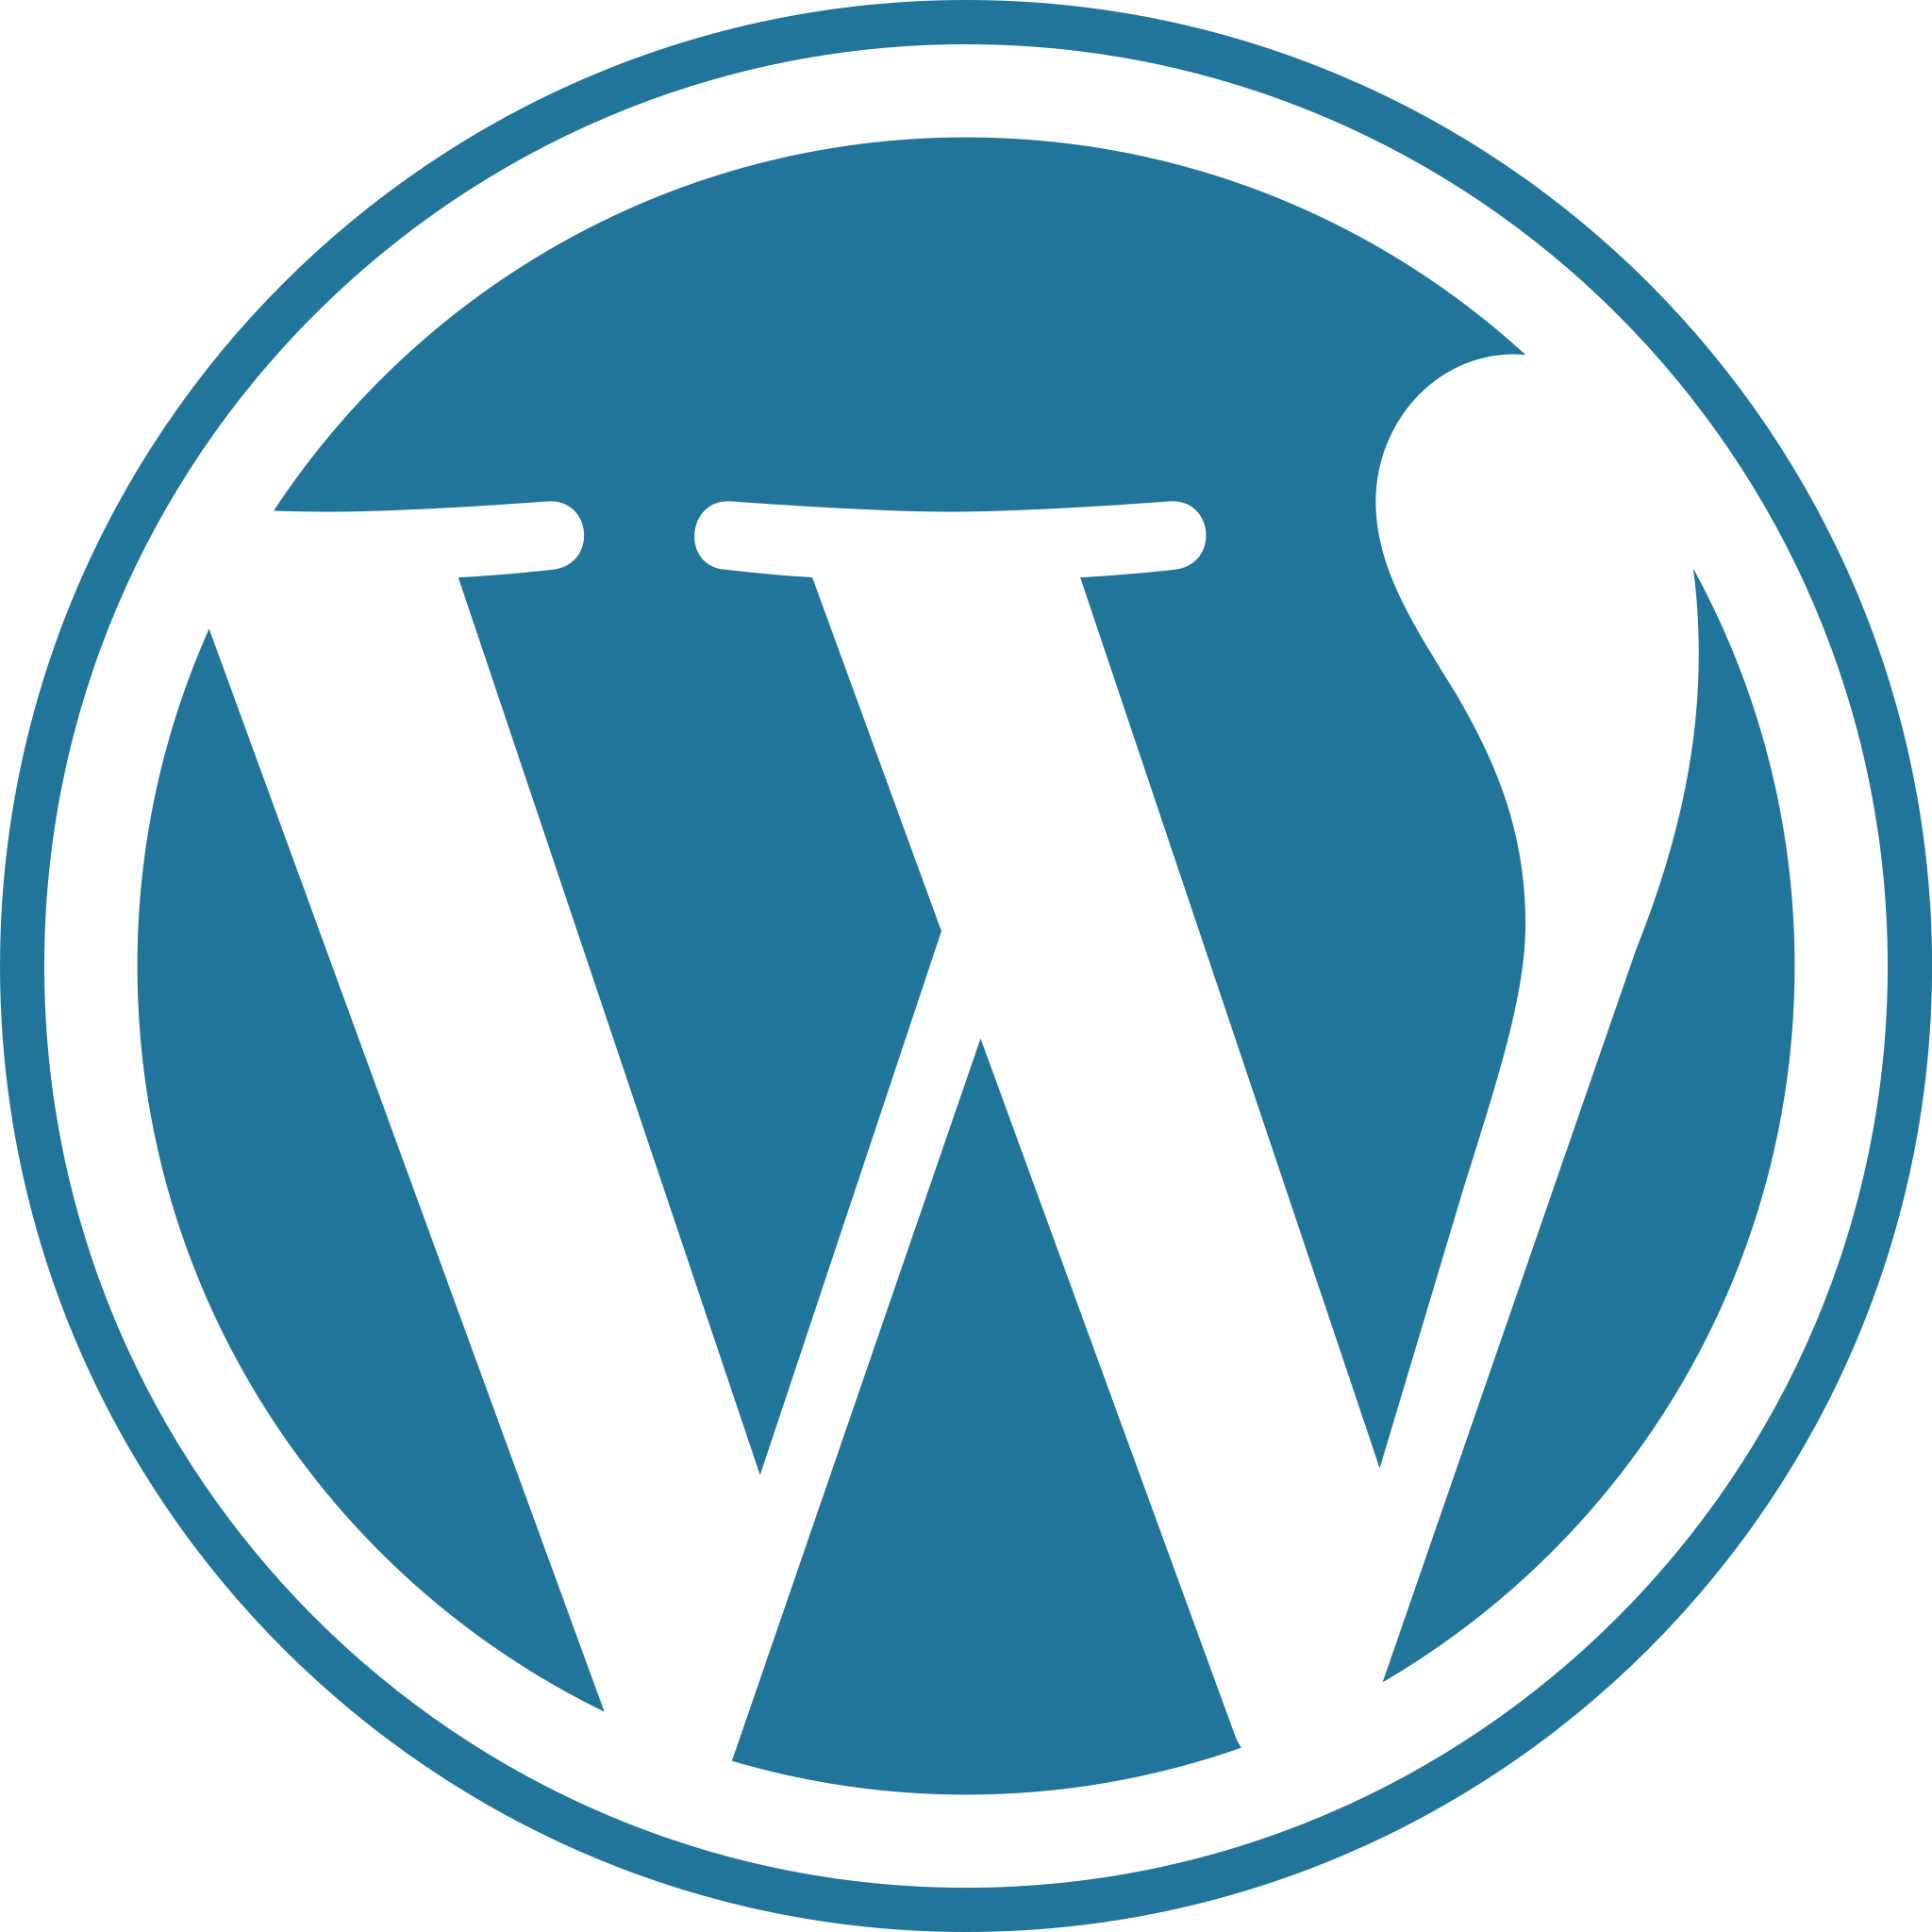 Wordpress logo, W written in white ina  blue circle, to showcase tha SUNZINET is a wordpress agency